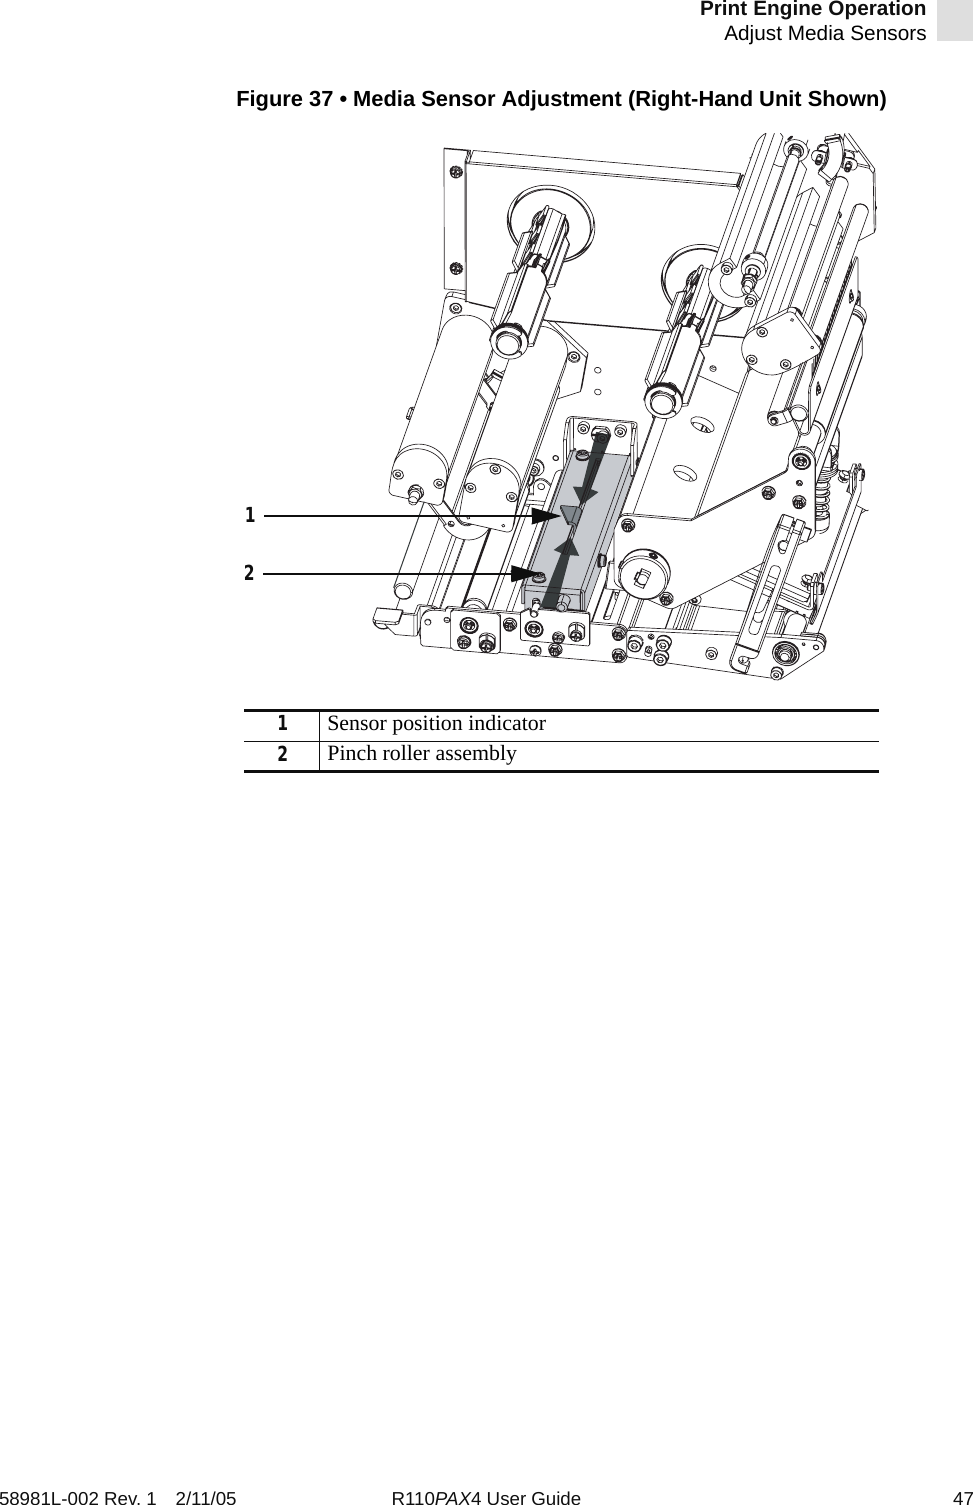 Print Engine OperationAdjust Media Sensors58981L-002 Rev. 1 2/11/05 R110PAX4 User Guide 47Figure 37 • Media Sensor Adjustment (Right-Hand Unit Shown)1Sensor position indicator2Pinch roller assembly12